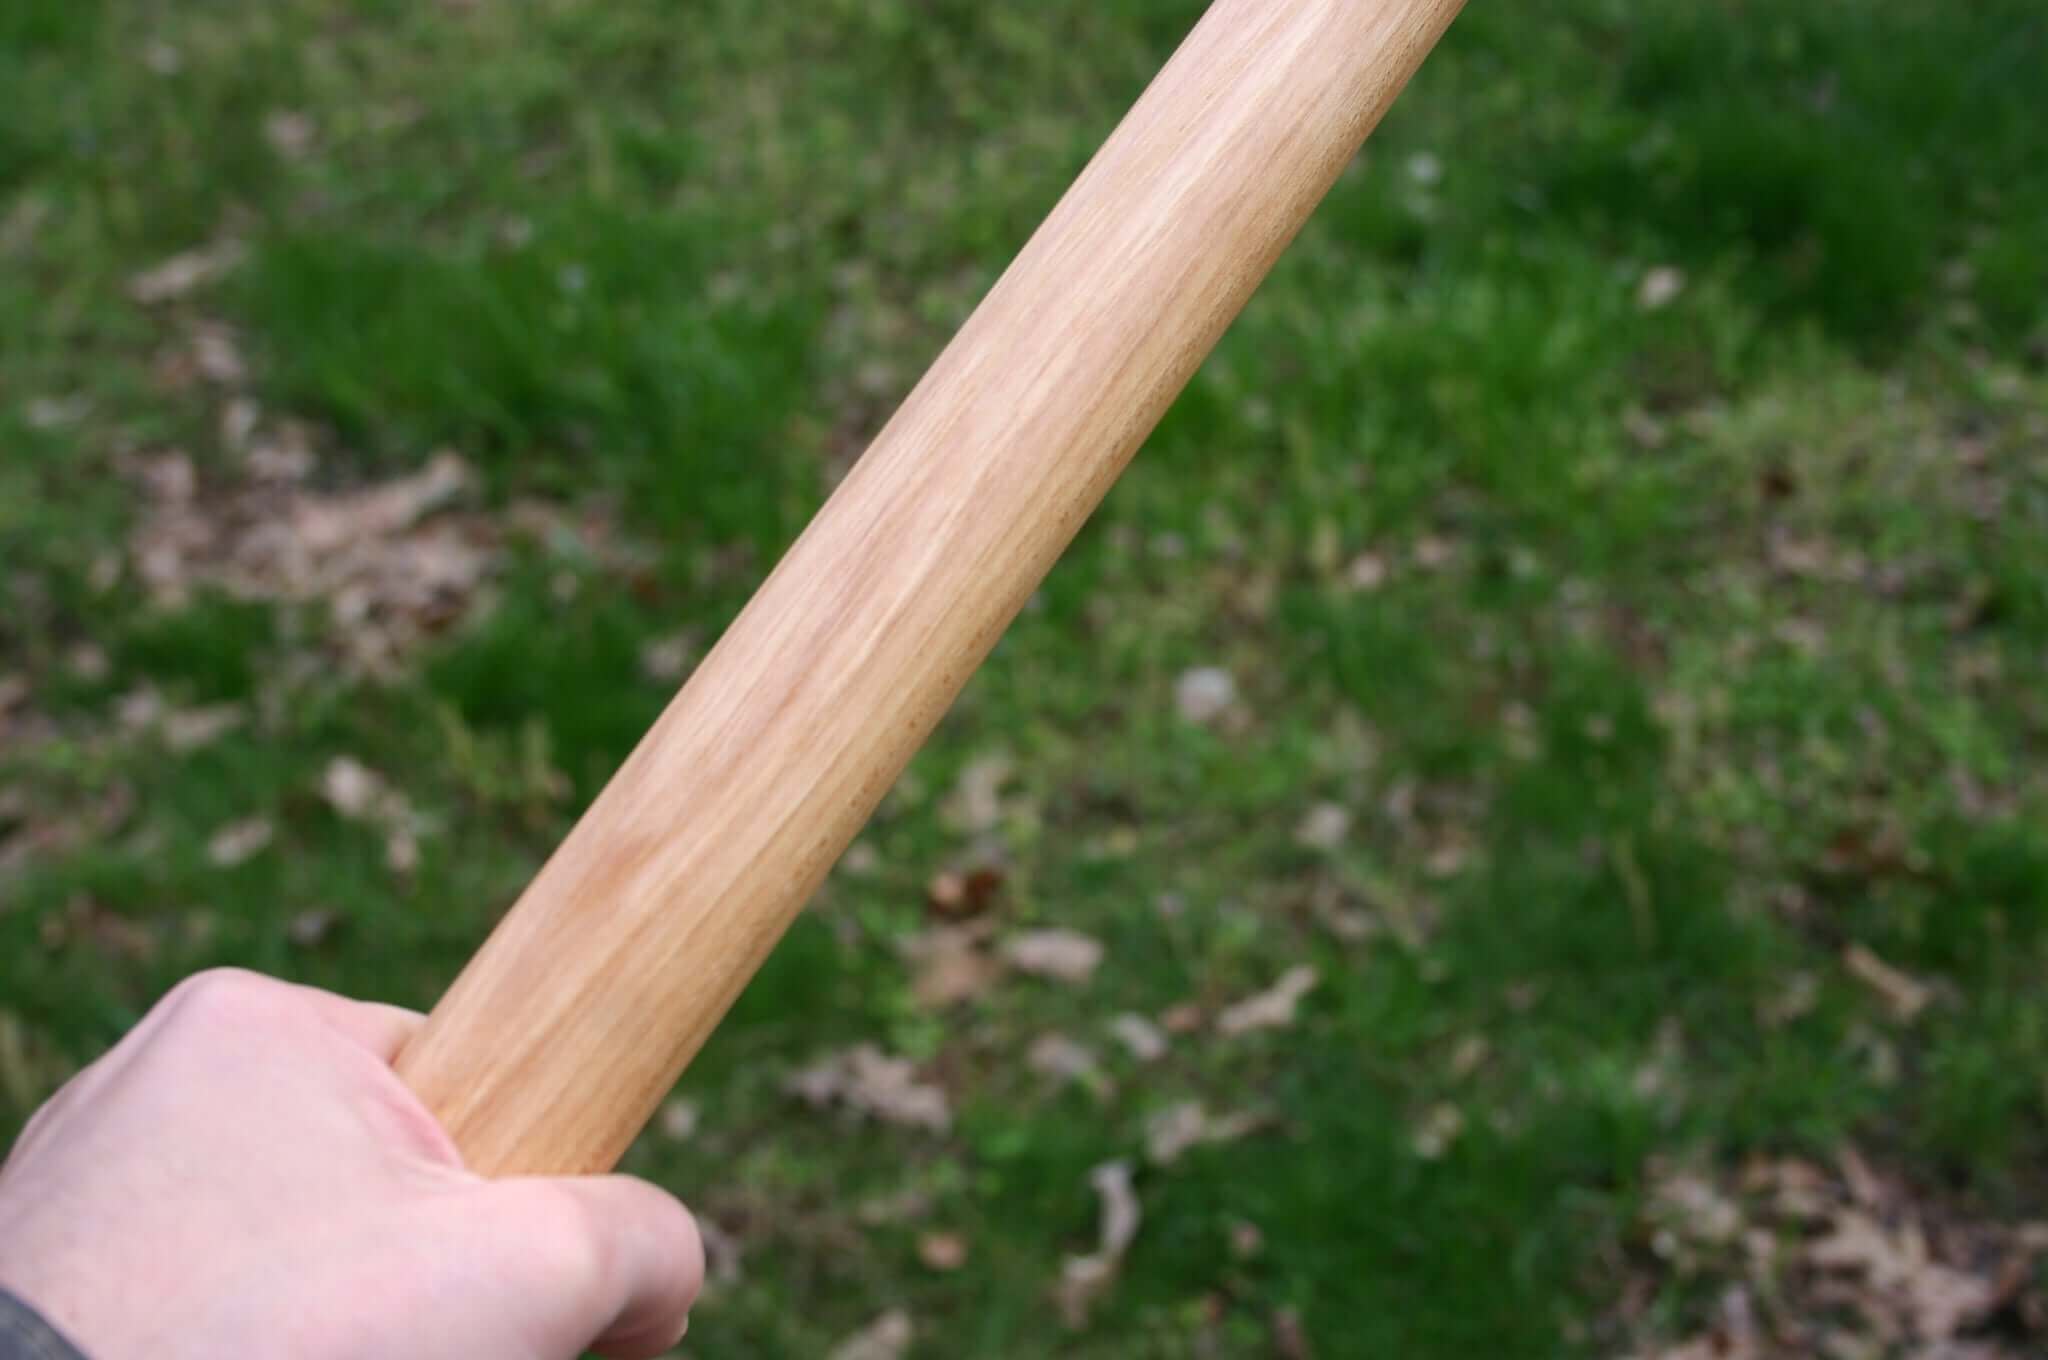 Okinawan traditional karate training tool hickory handcrafted dojo training sensai implement